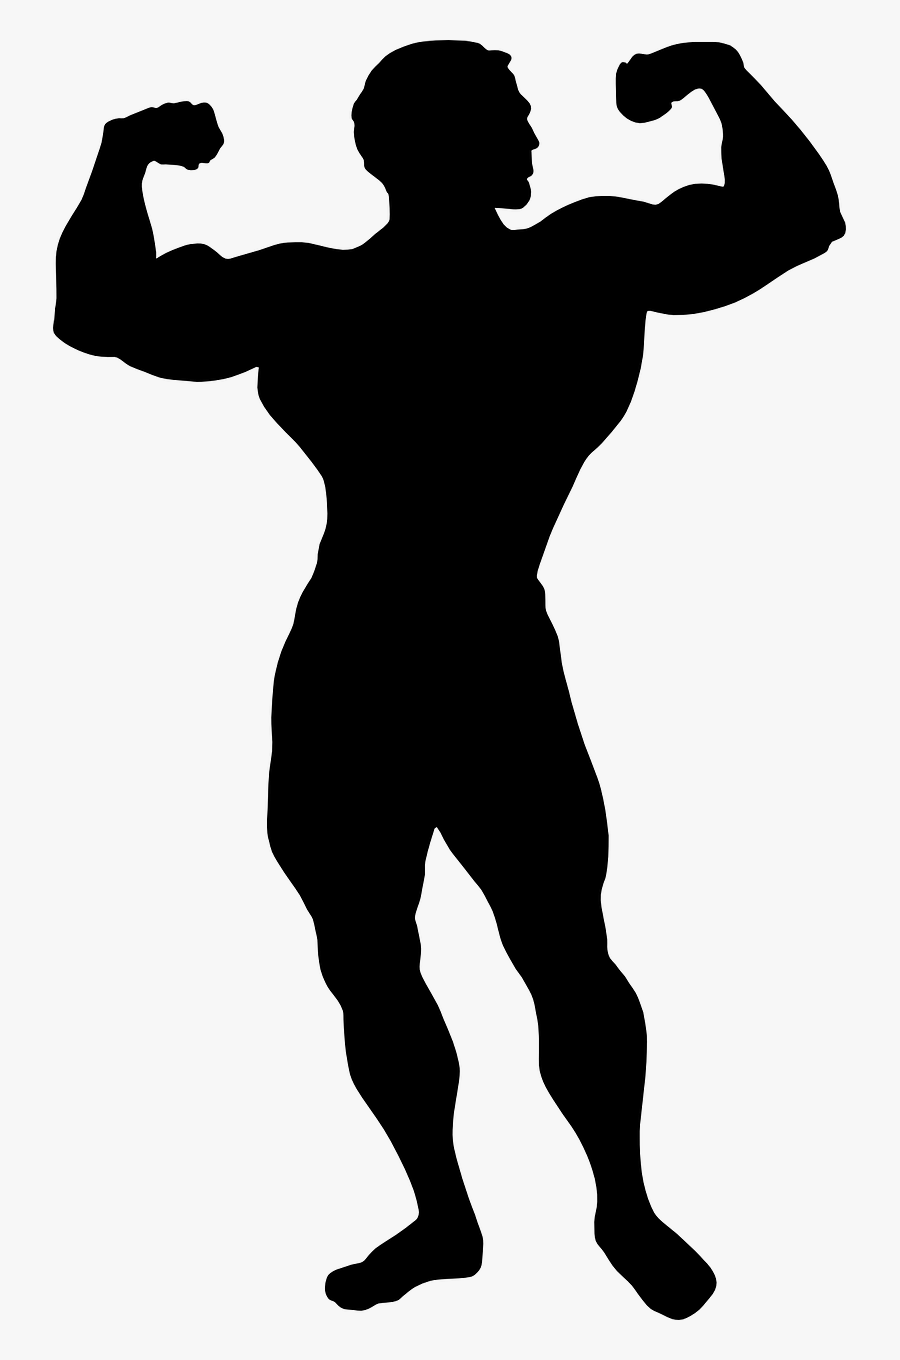 Bodybuilding Clip Art Illustration Silhouette Image - Black Panther Hero Silhouette, Transparent Clipart